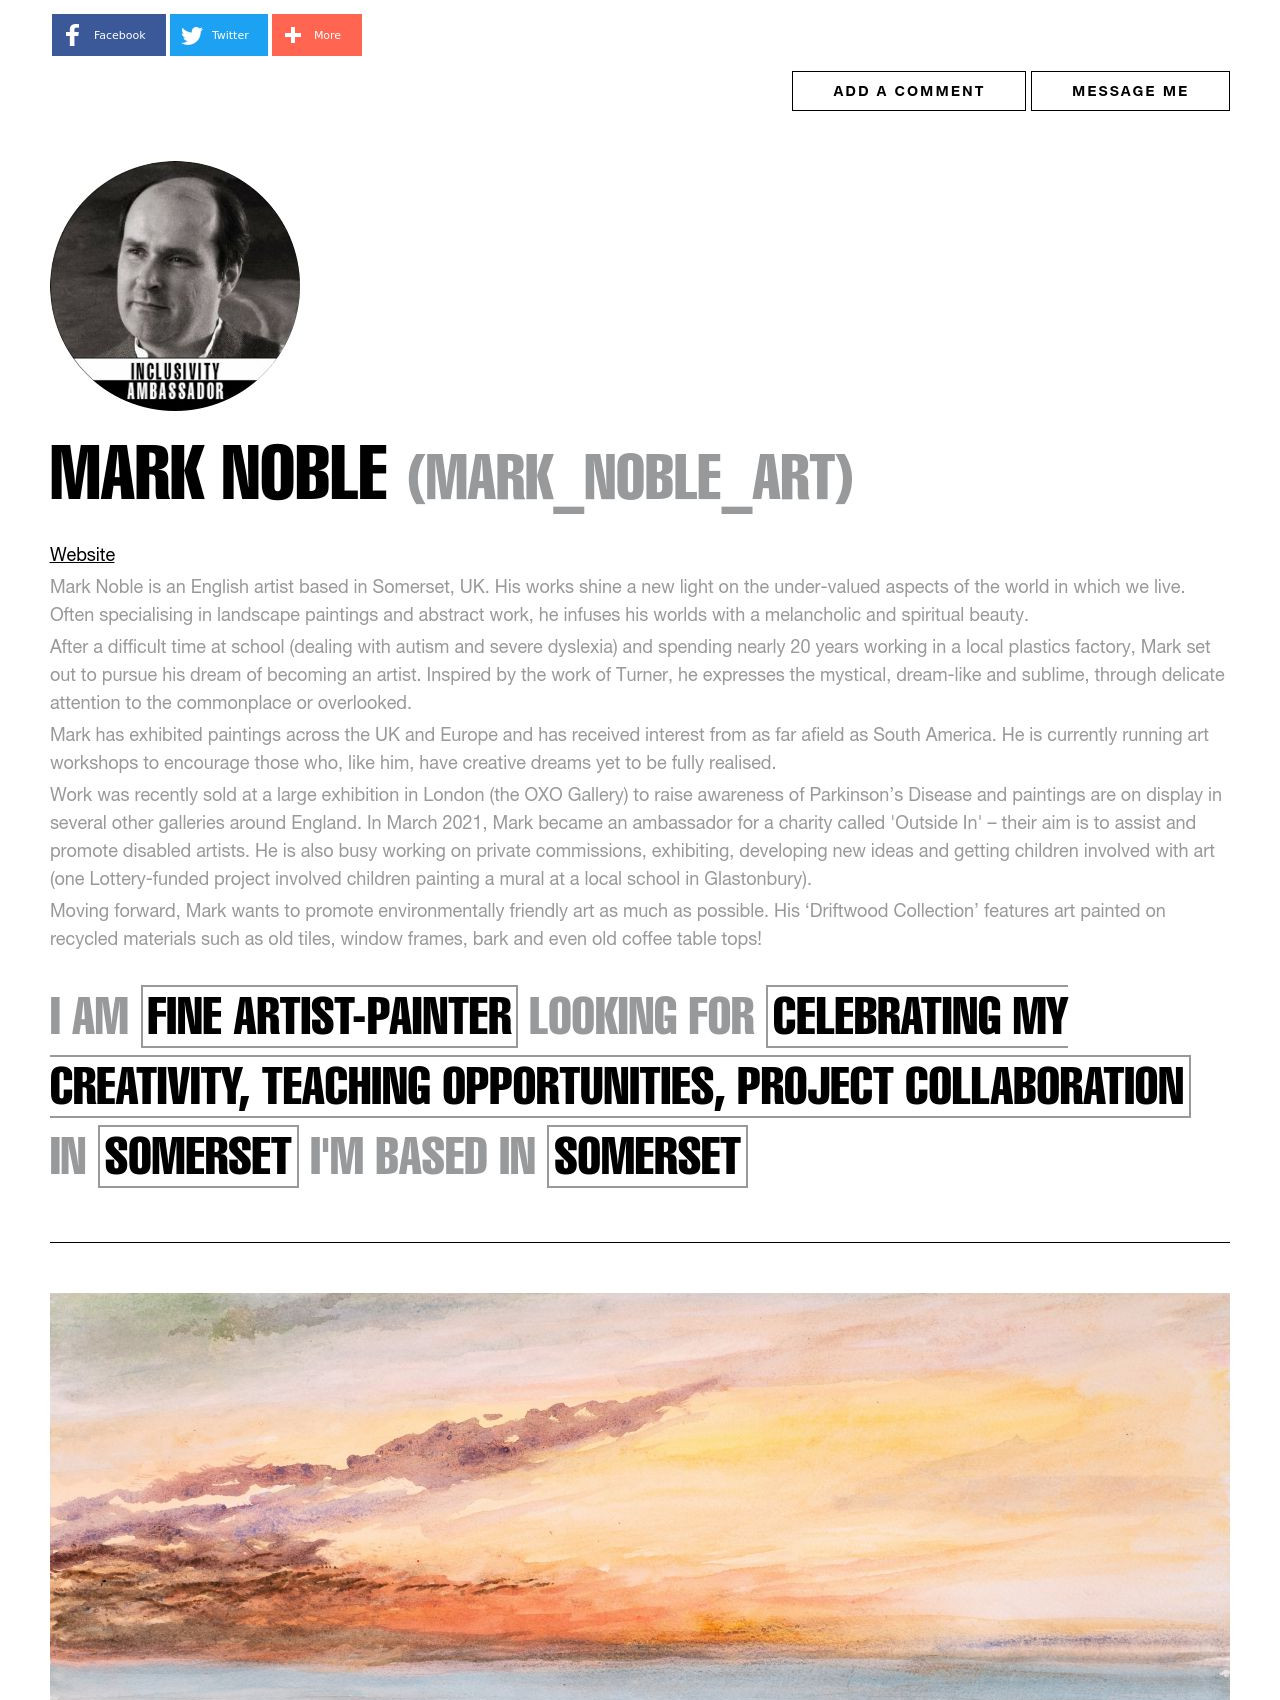 Mark Noble